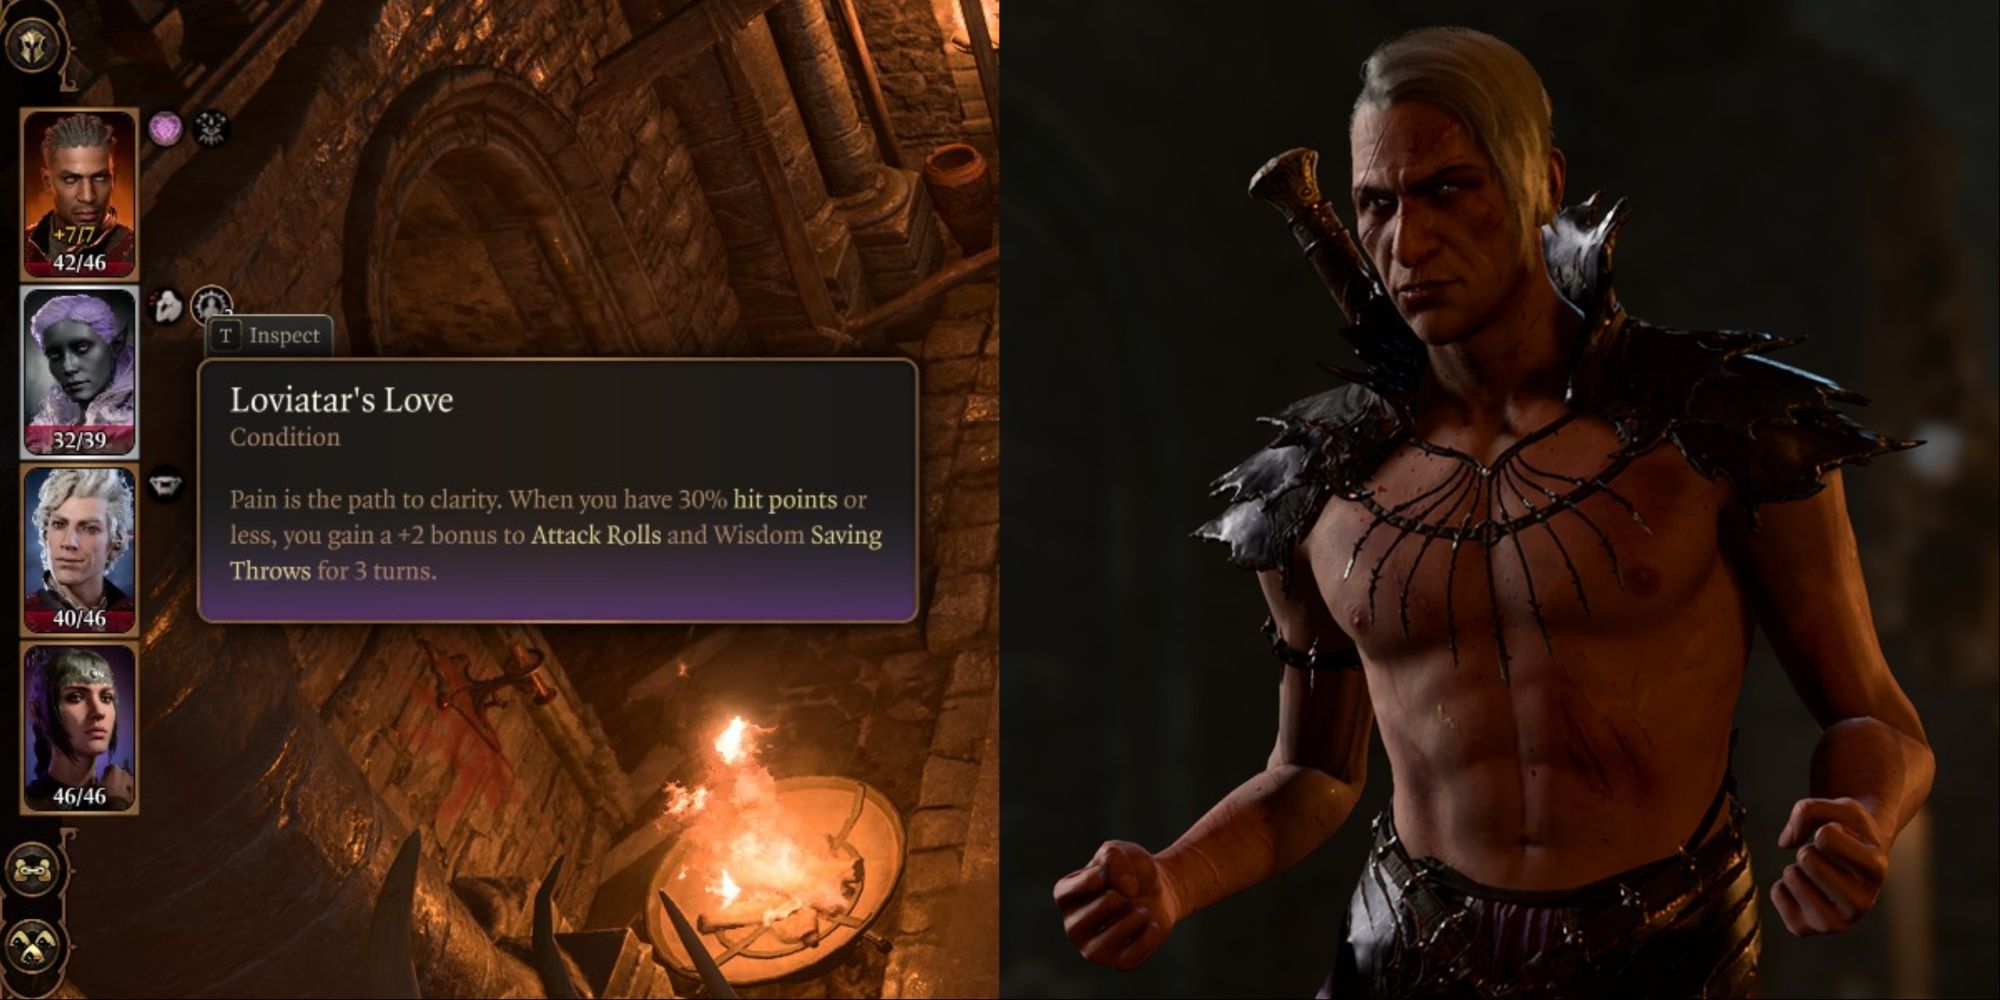 The in-game description of Loviatar's Love and Abdirak in Baldur's Gate 3